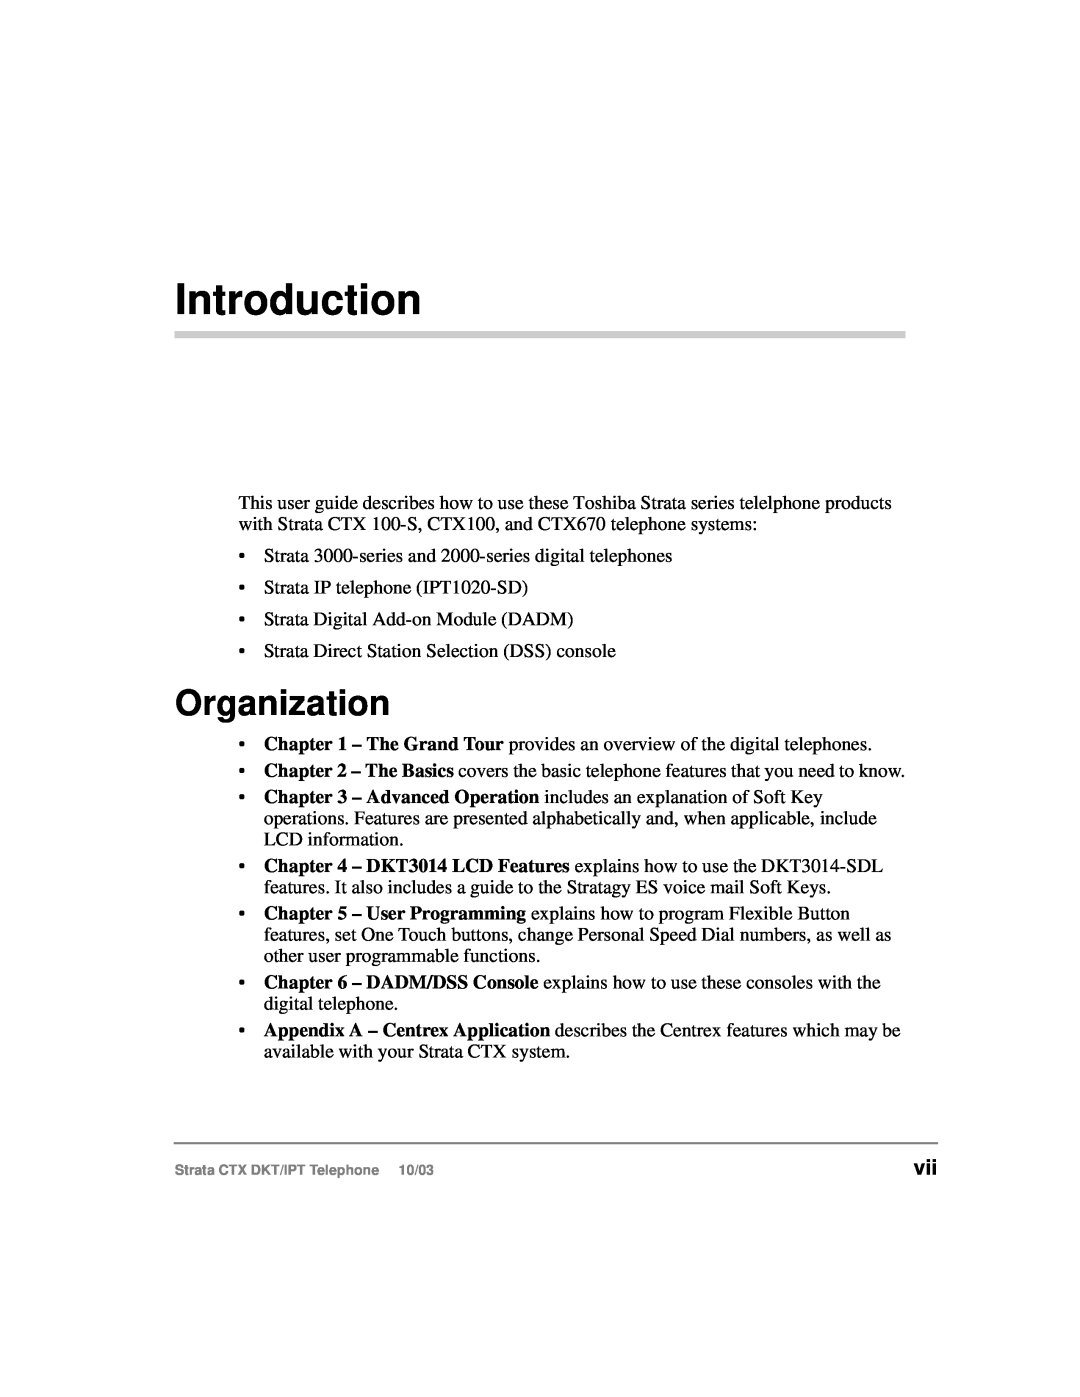 Toshiba DKT, IPT manual Introduction, Organization 